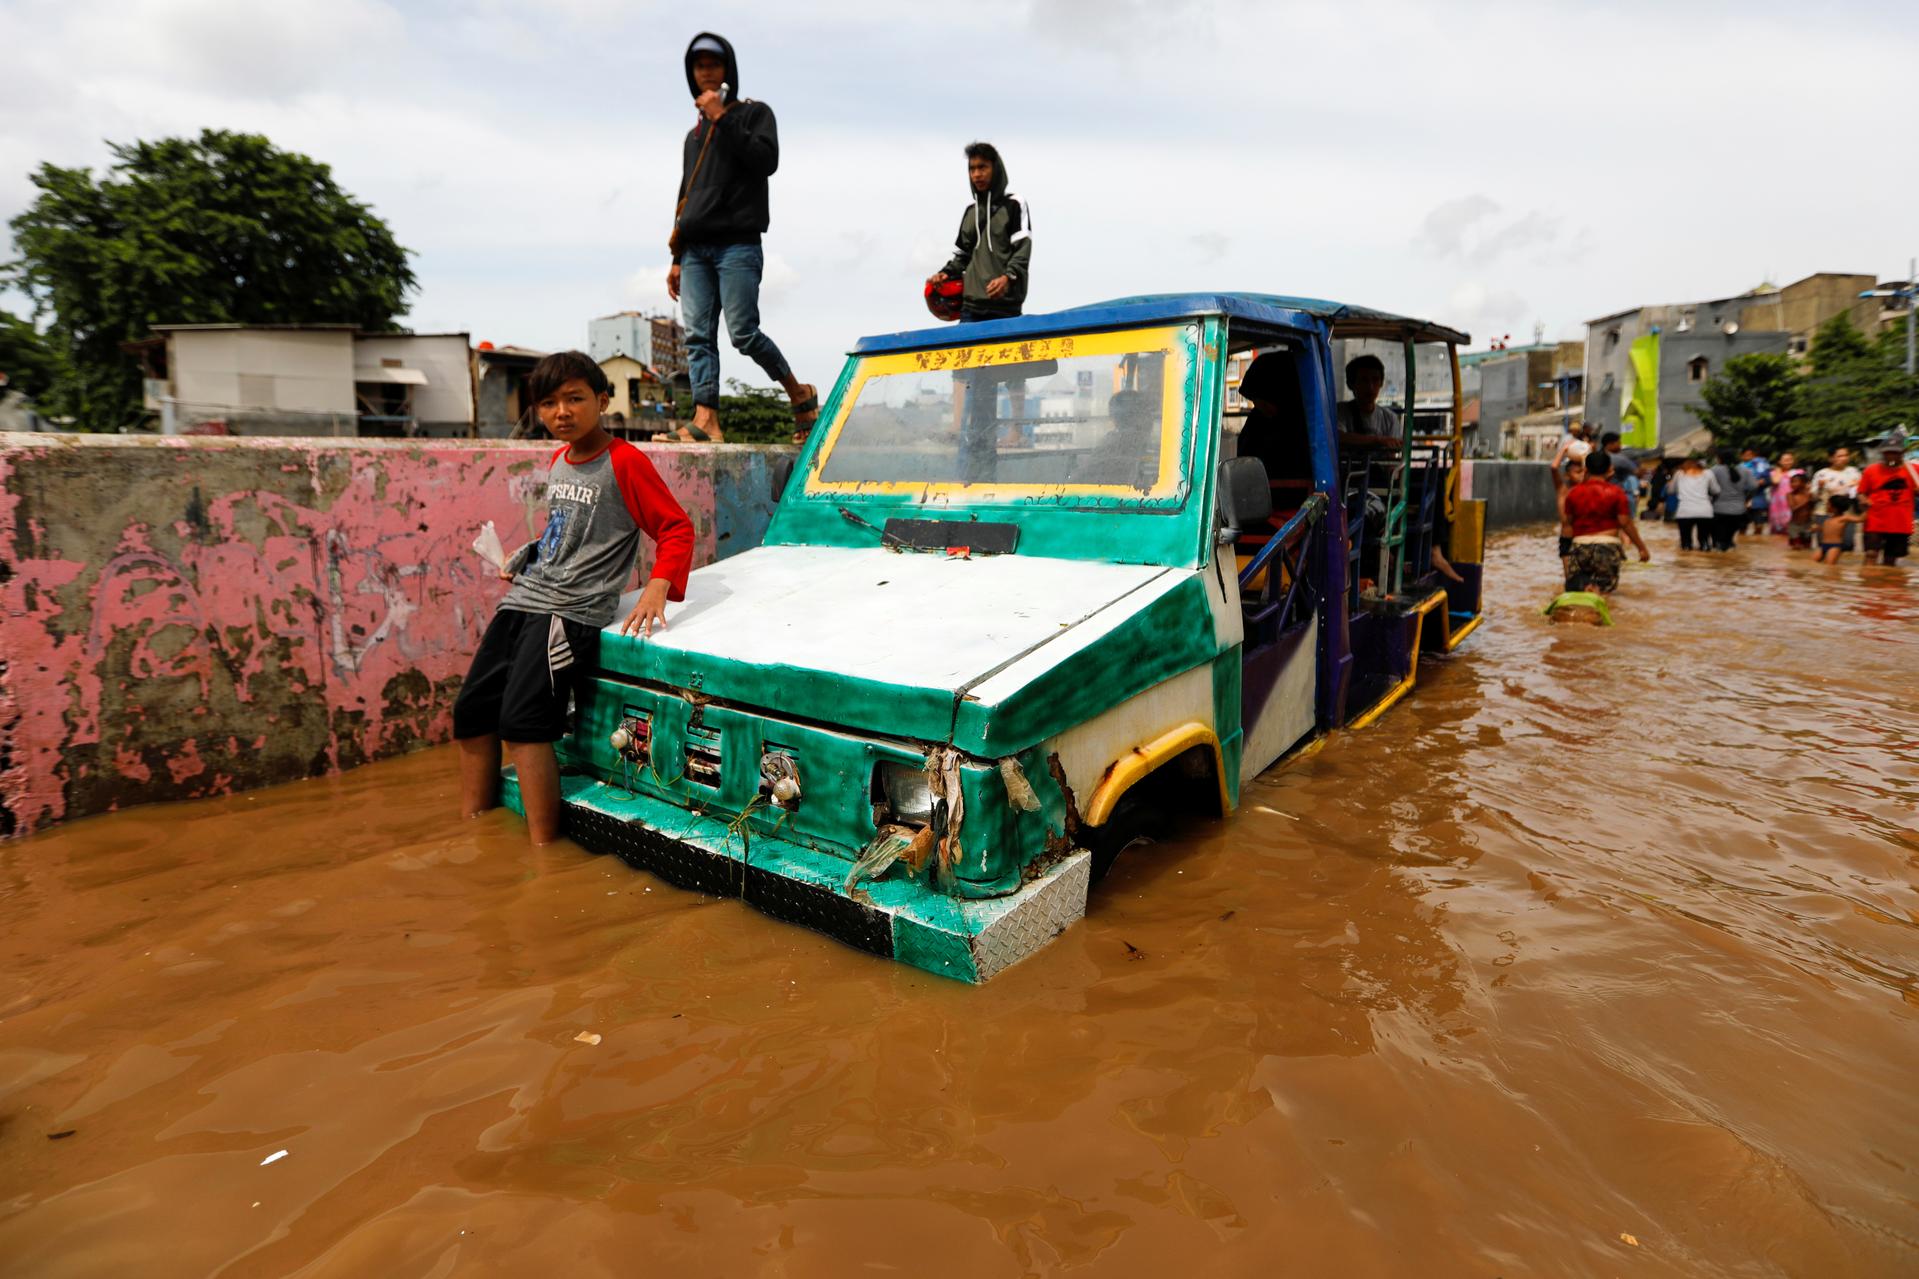 Indonesia plans cloud seeding to halt rain as floods death toll hits 30